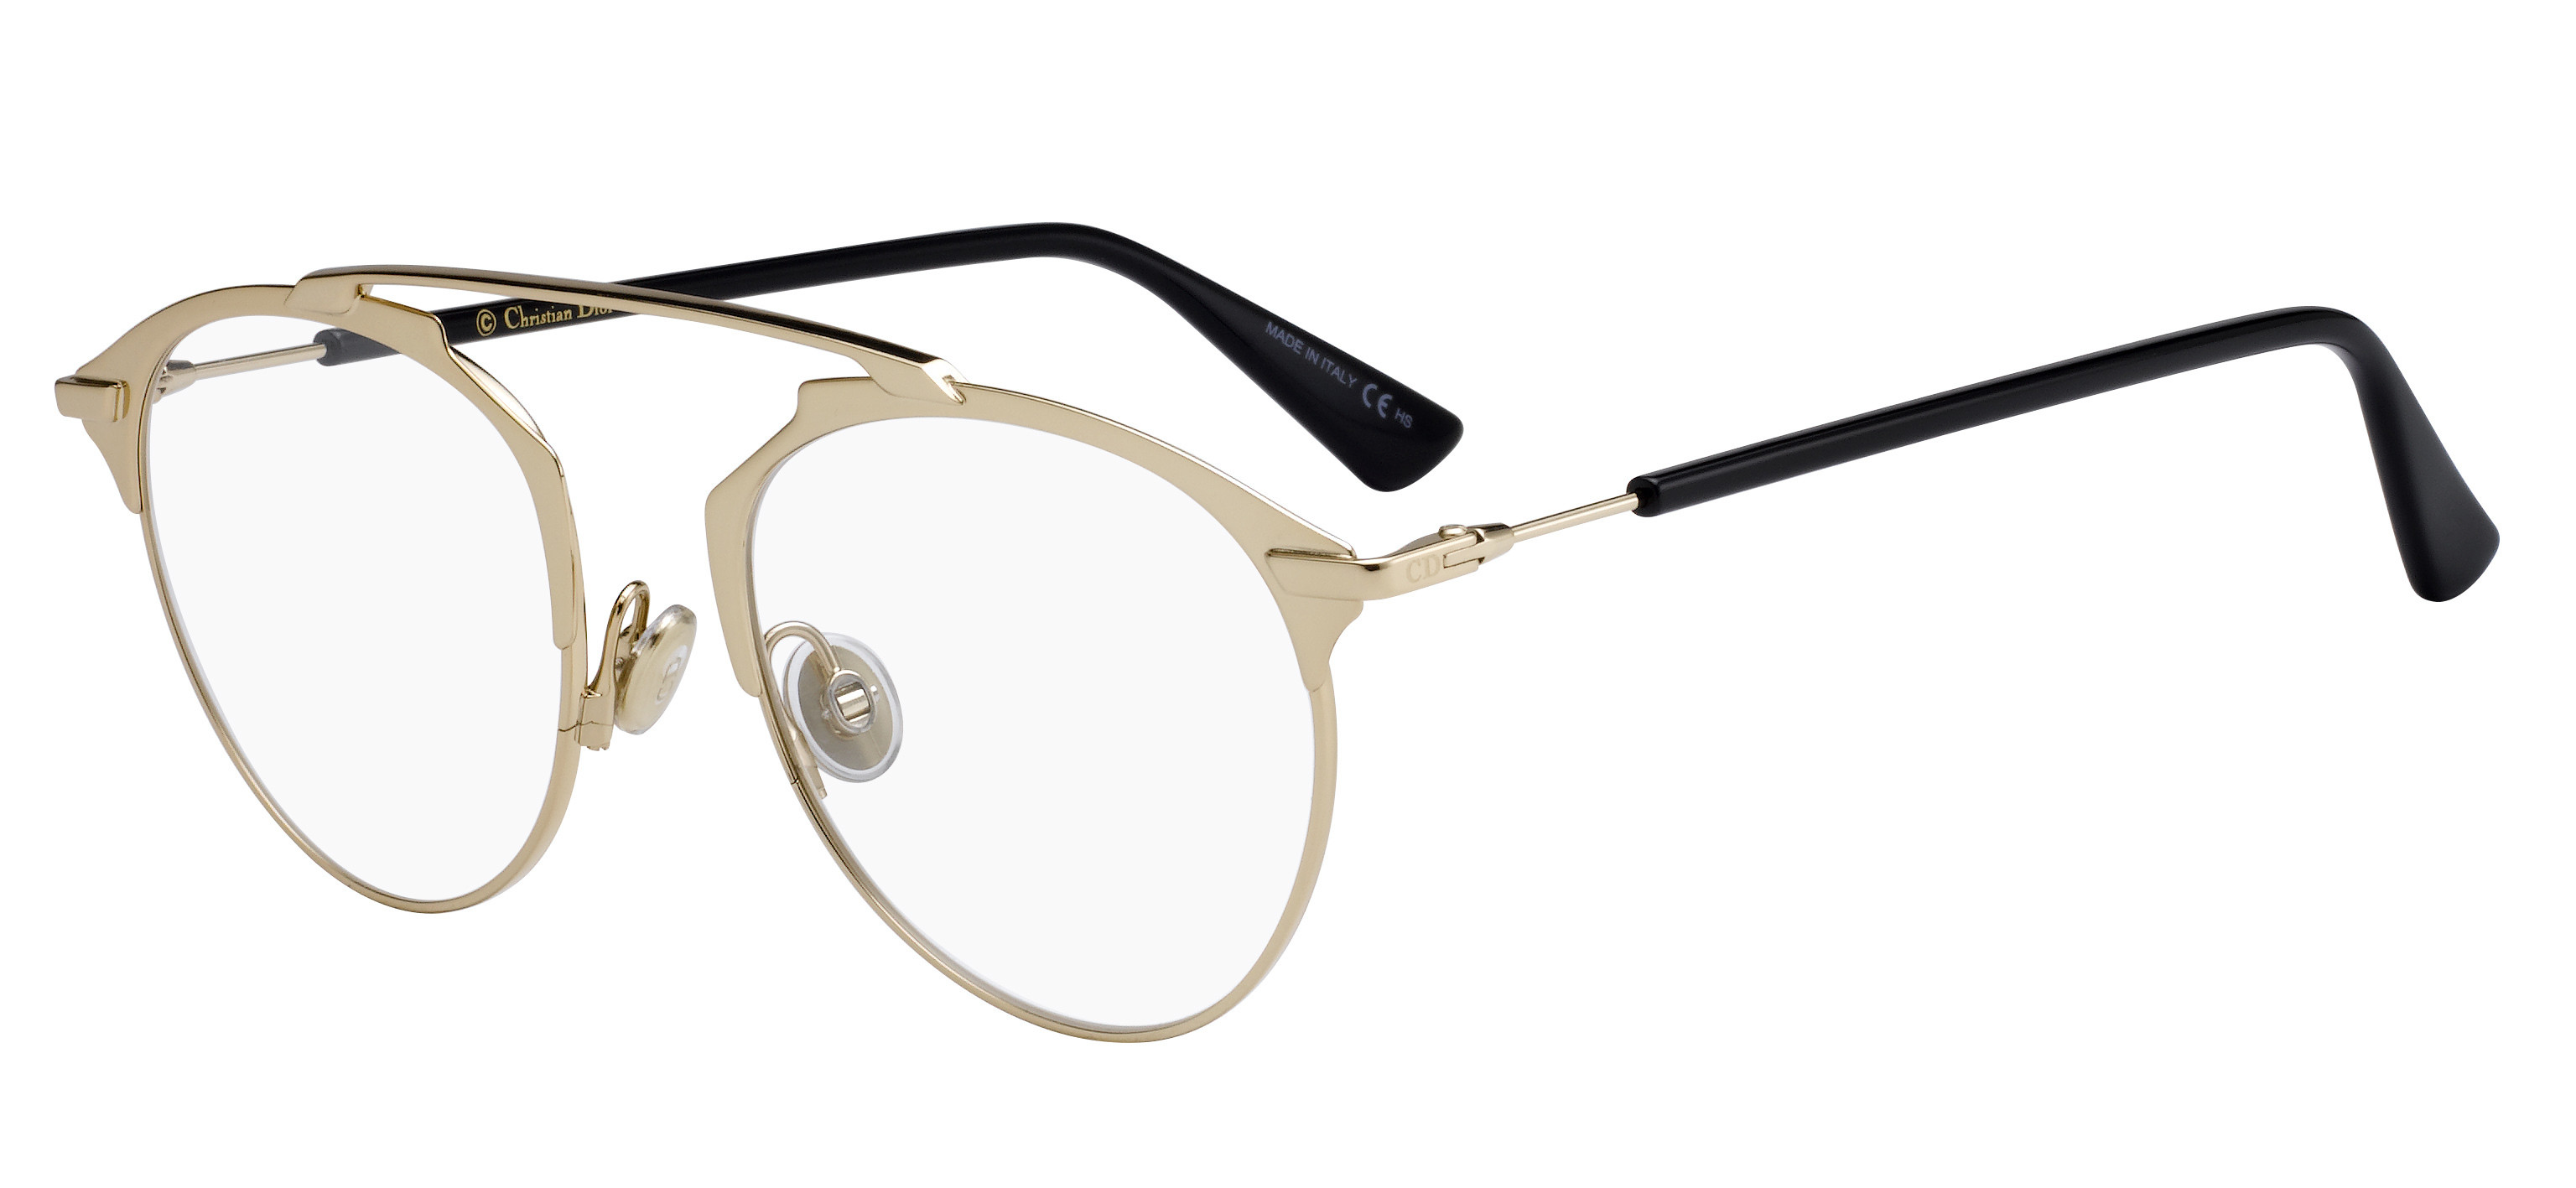 Christian Dior Eyeglasses - Luxury Designerware Eyeglasses